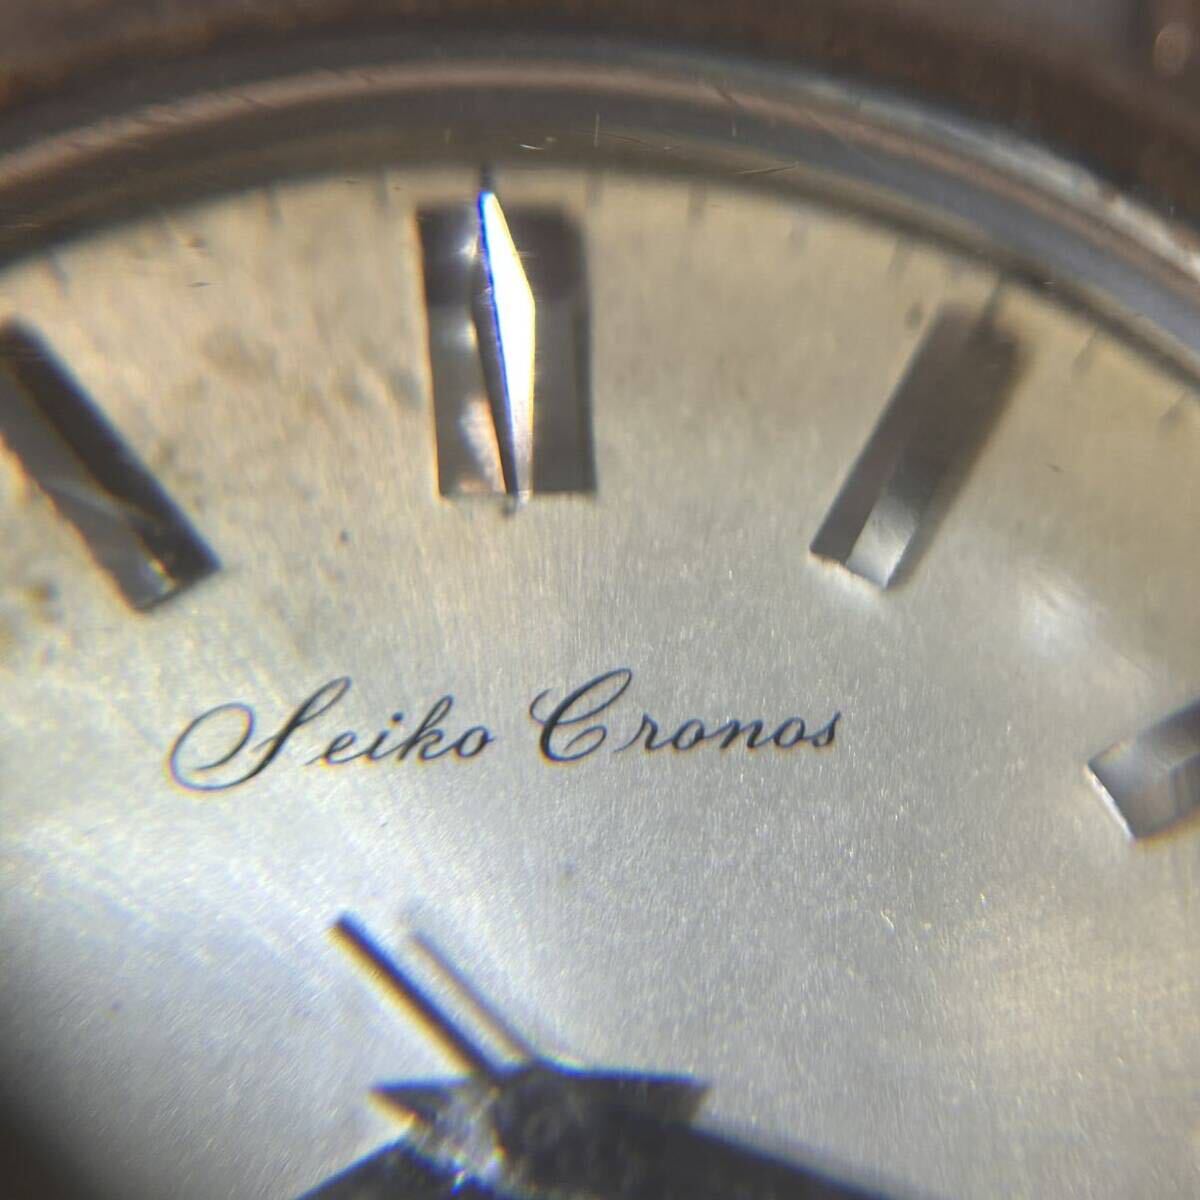 SEIKO Cronos セイコー クロノス 腕時計 時計 WATER 50 PROOF 中古品の画像4